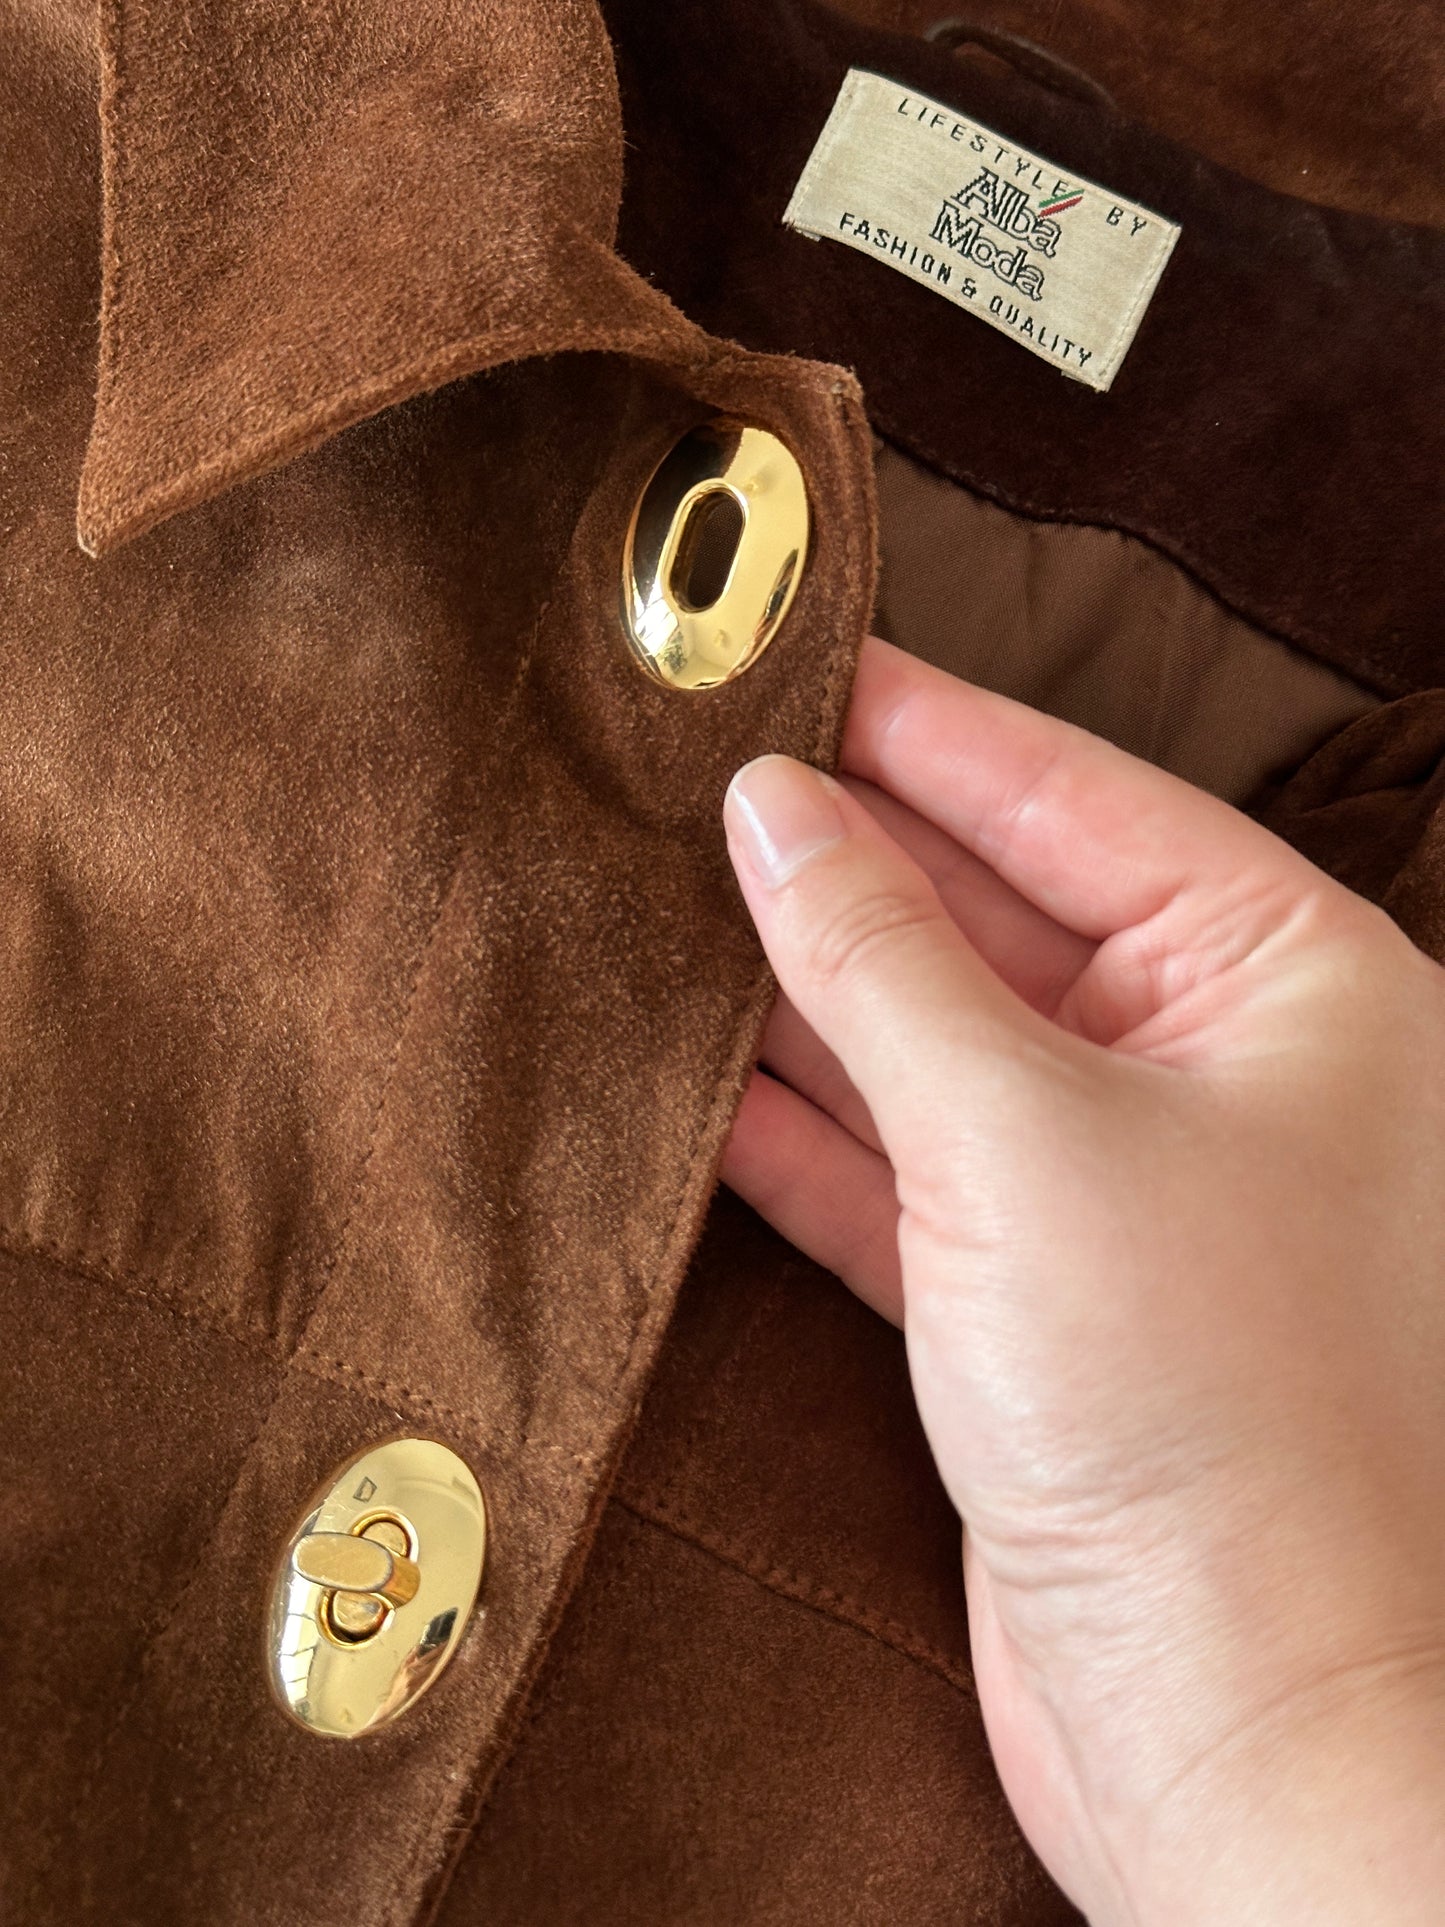 Vintage 100% suede leather jacket